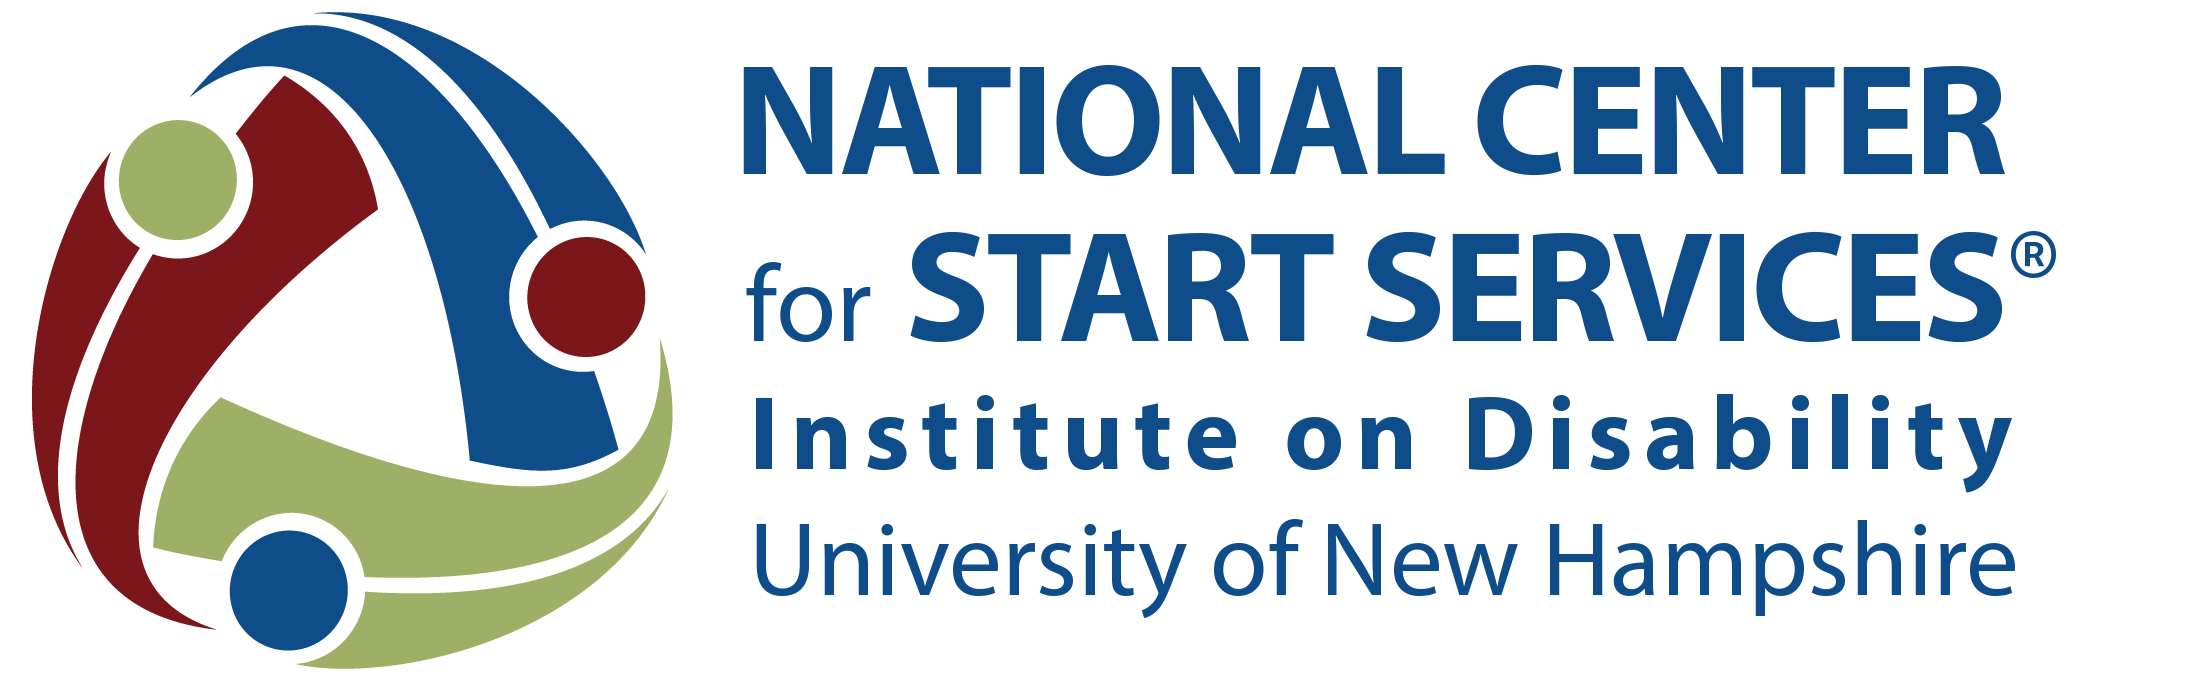 National Center for START Services